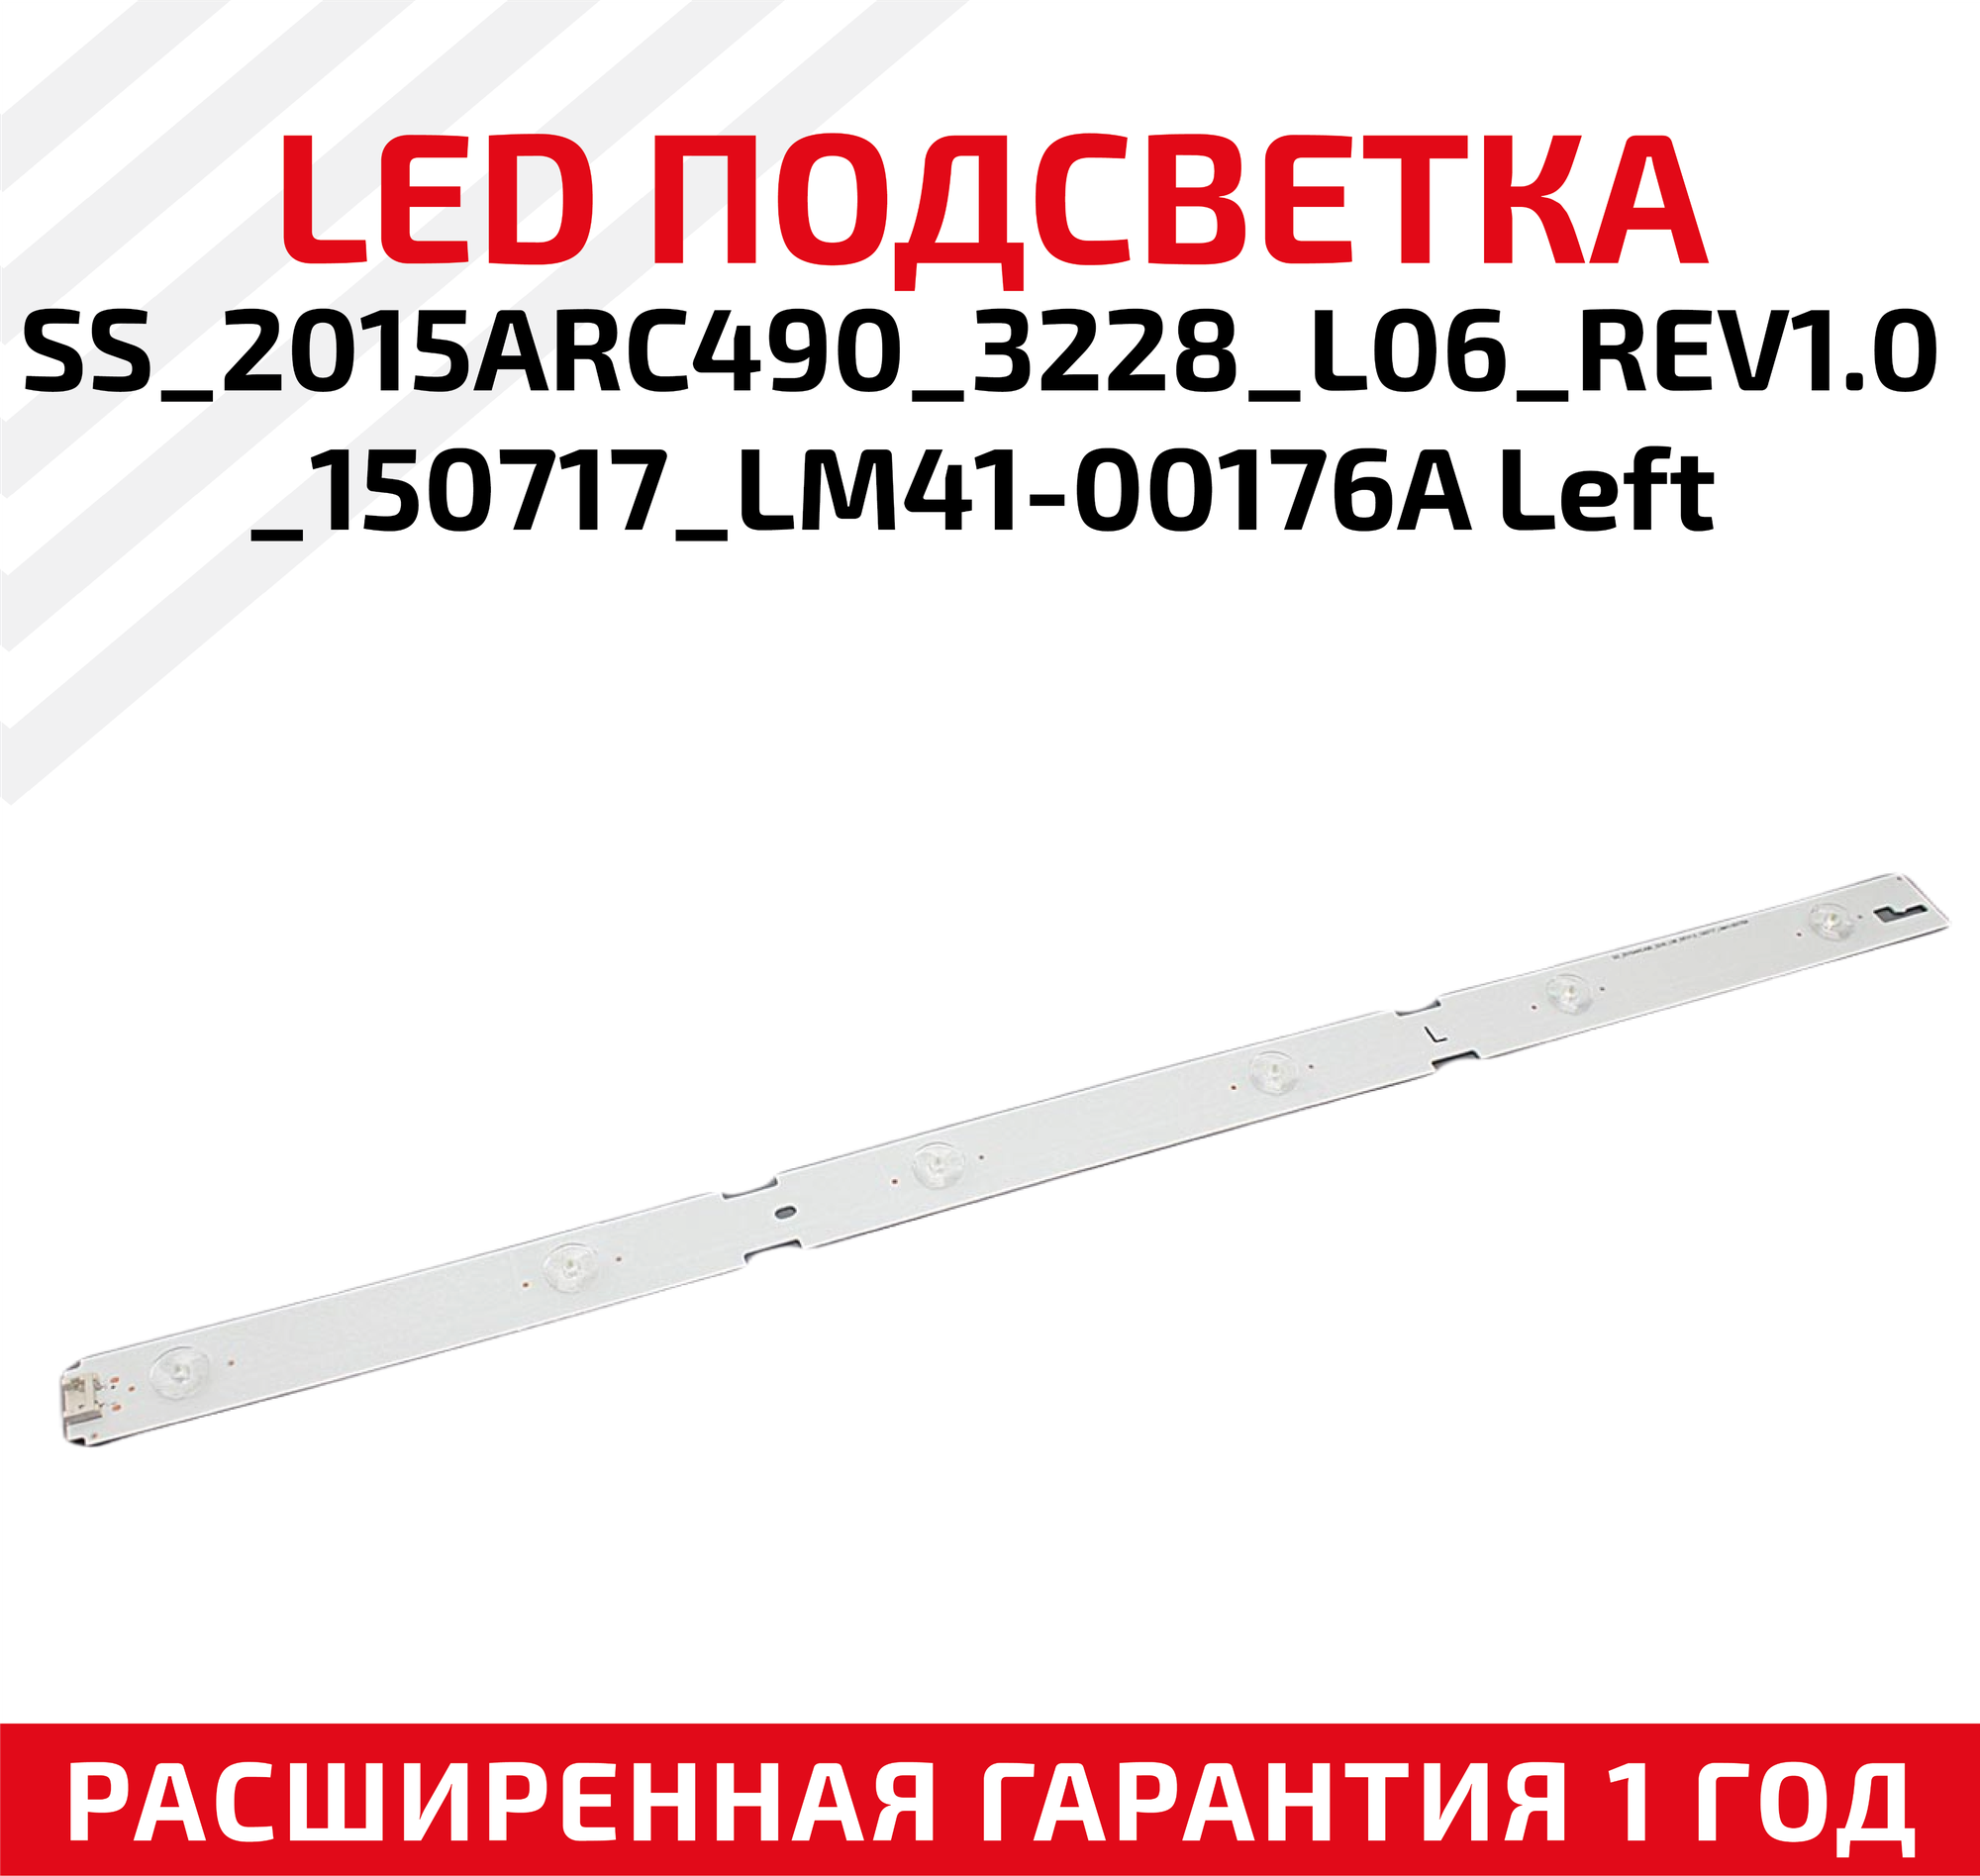 LED подсветка (светодиодная планка) для телевизора SS_2015ARC490_3228_L06_REV1.0_150717_LM41-00176A Left